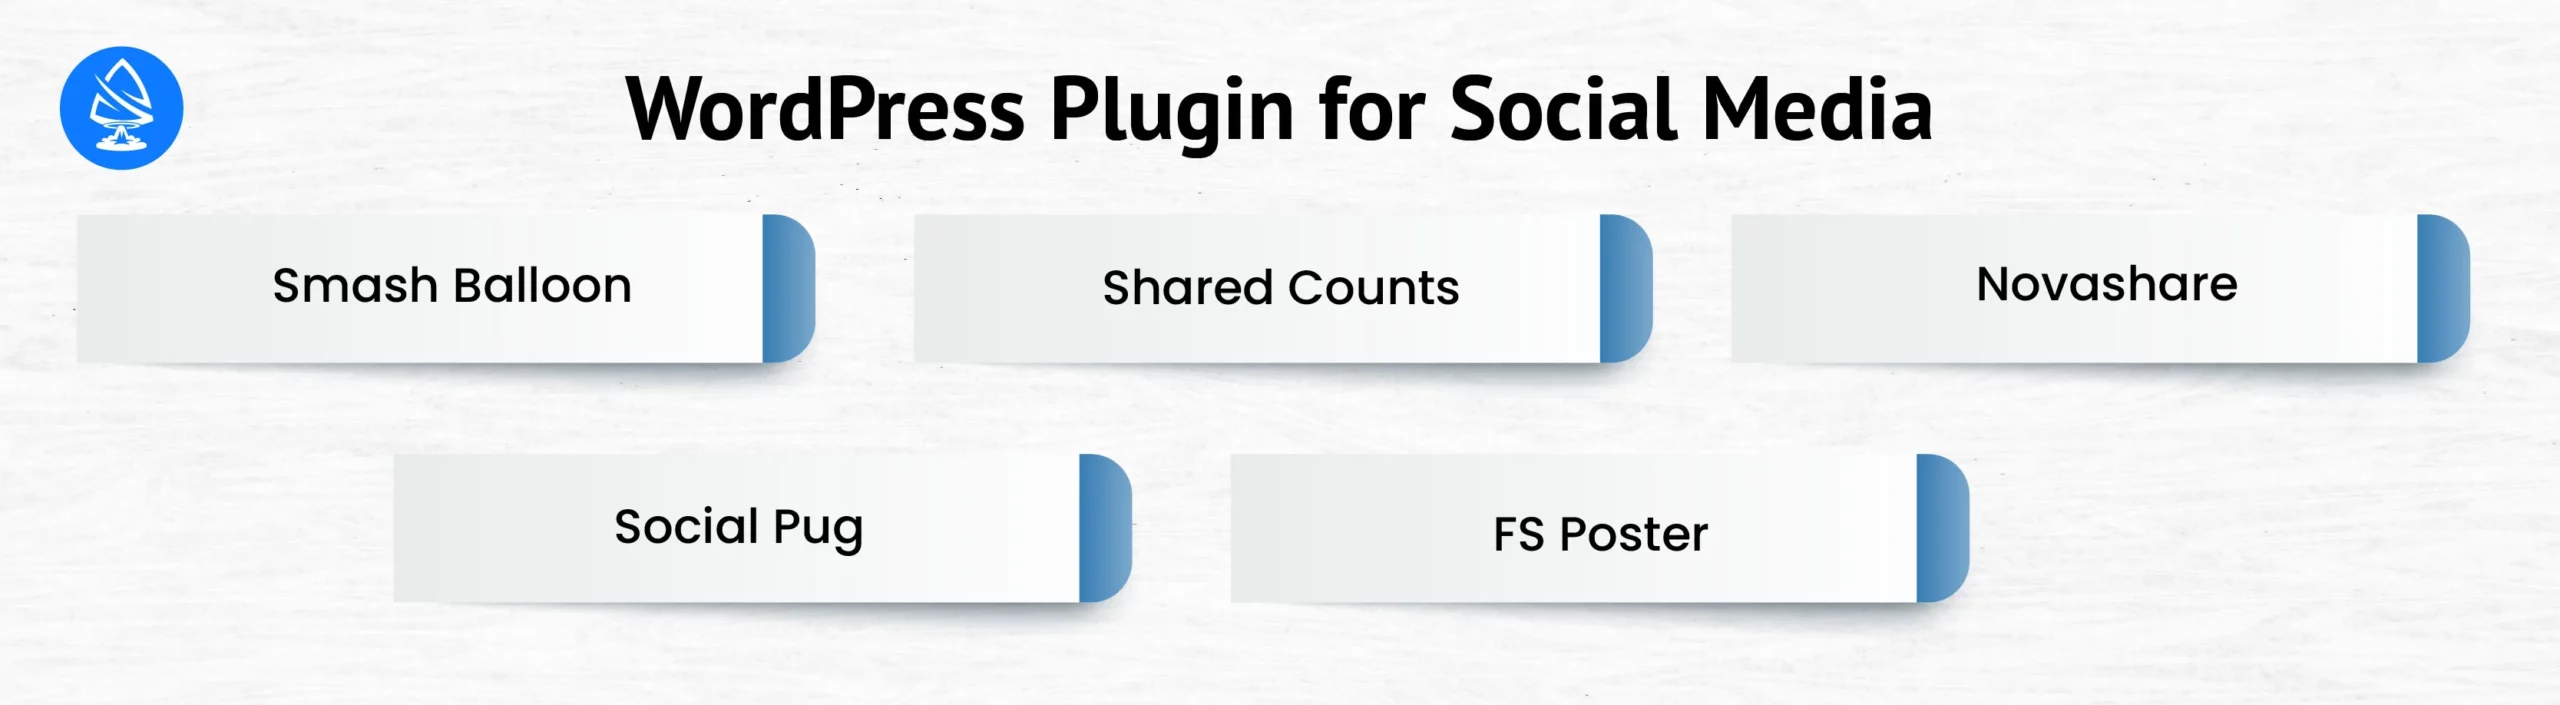 WordPress Plugin for Social Media